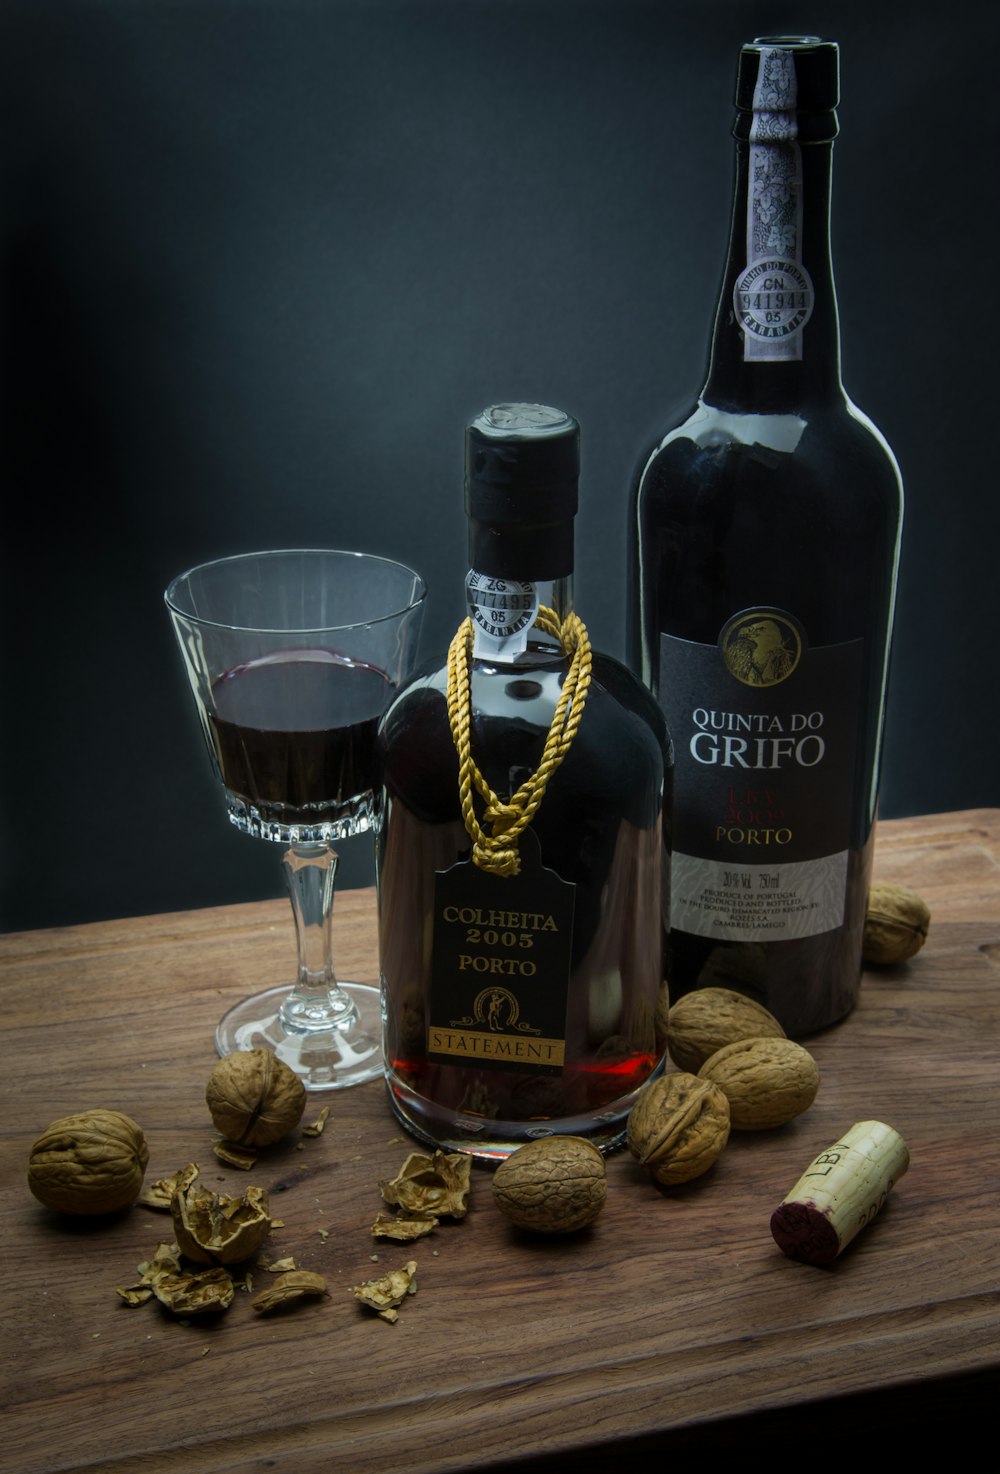 two liquor bottle beside wine glass on brown table